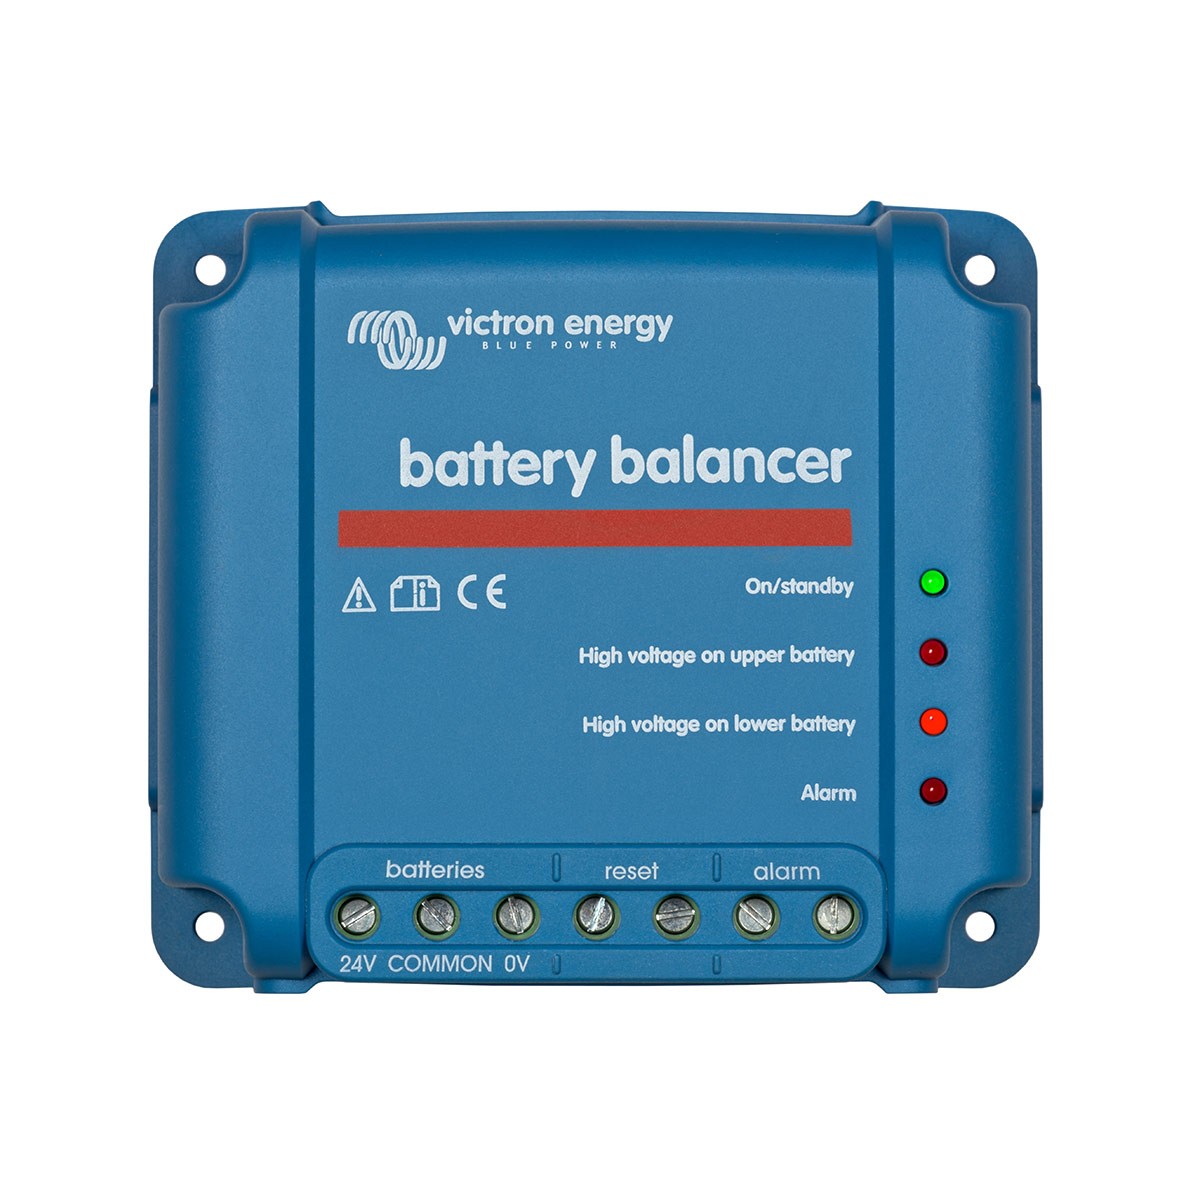 Battery balancer Victron Energy